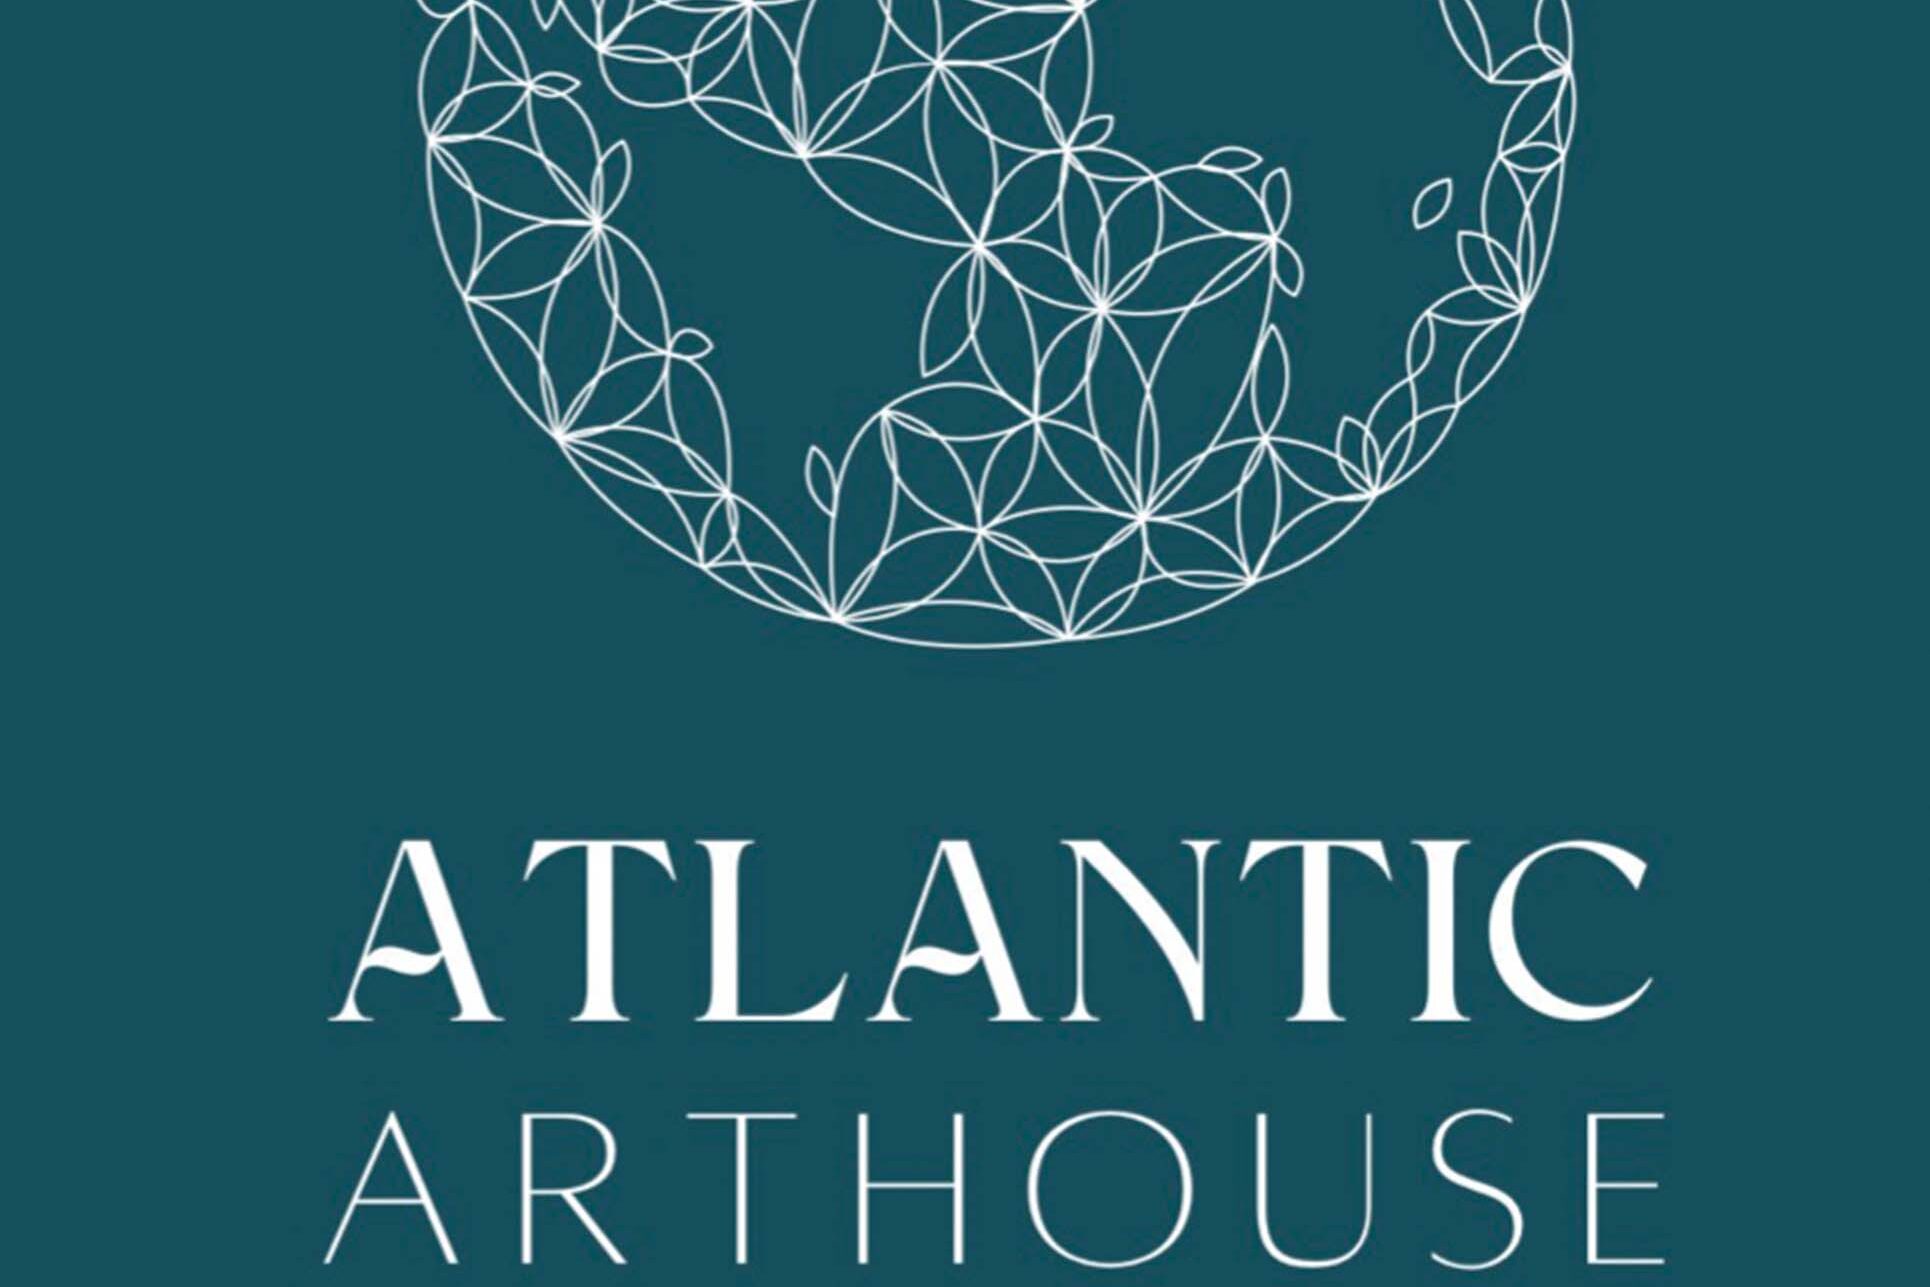 Atlantic Arthouse: The Open Boat